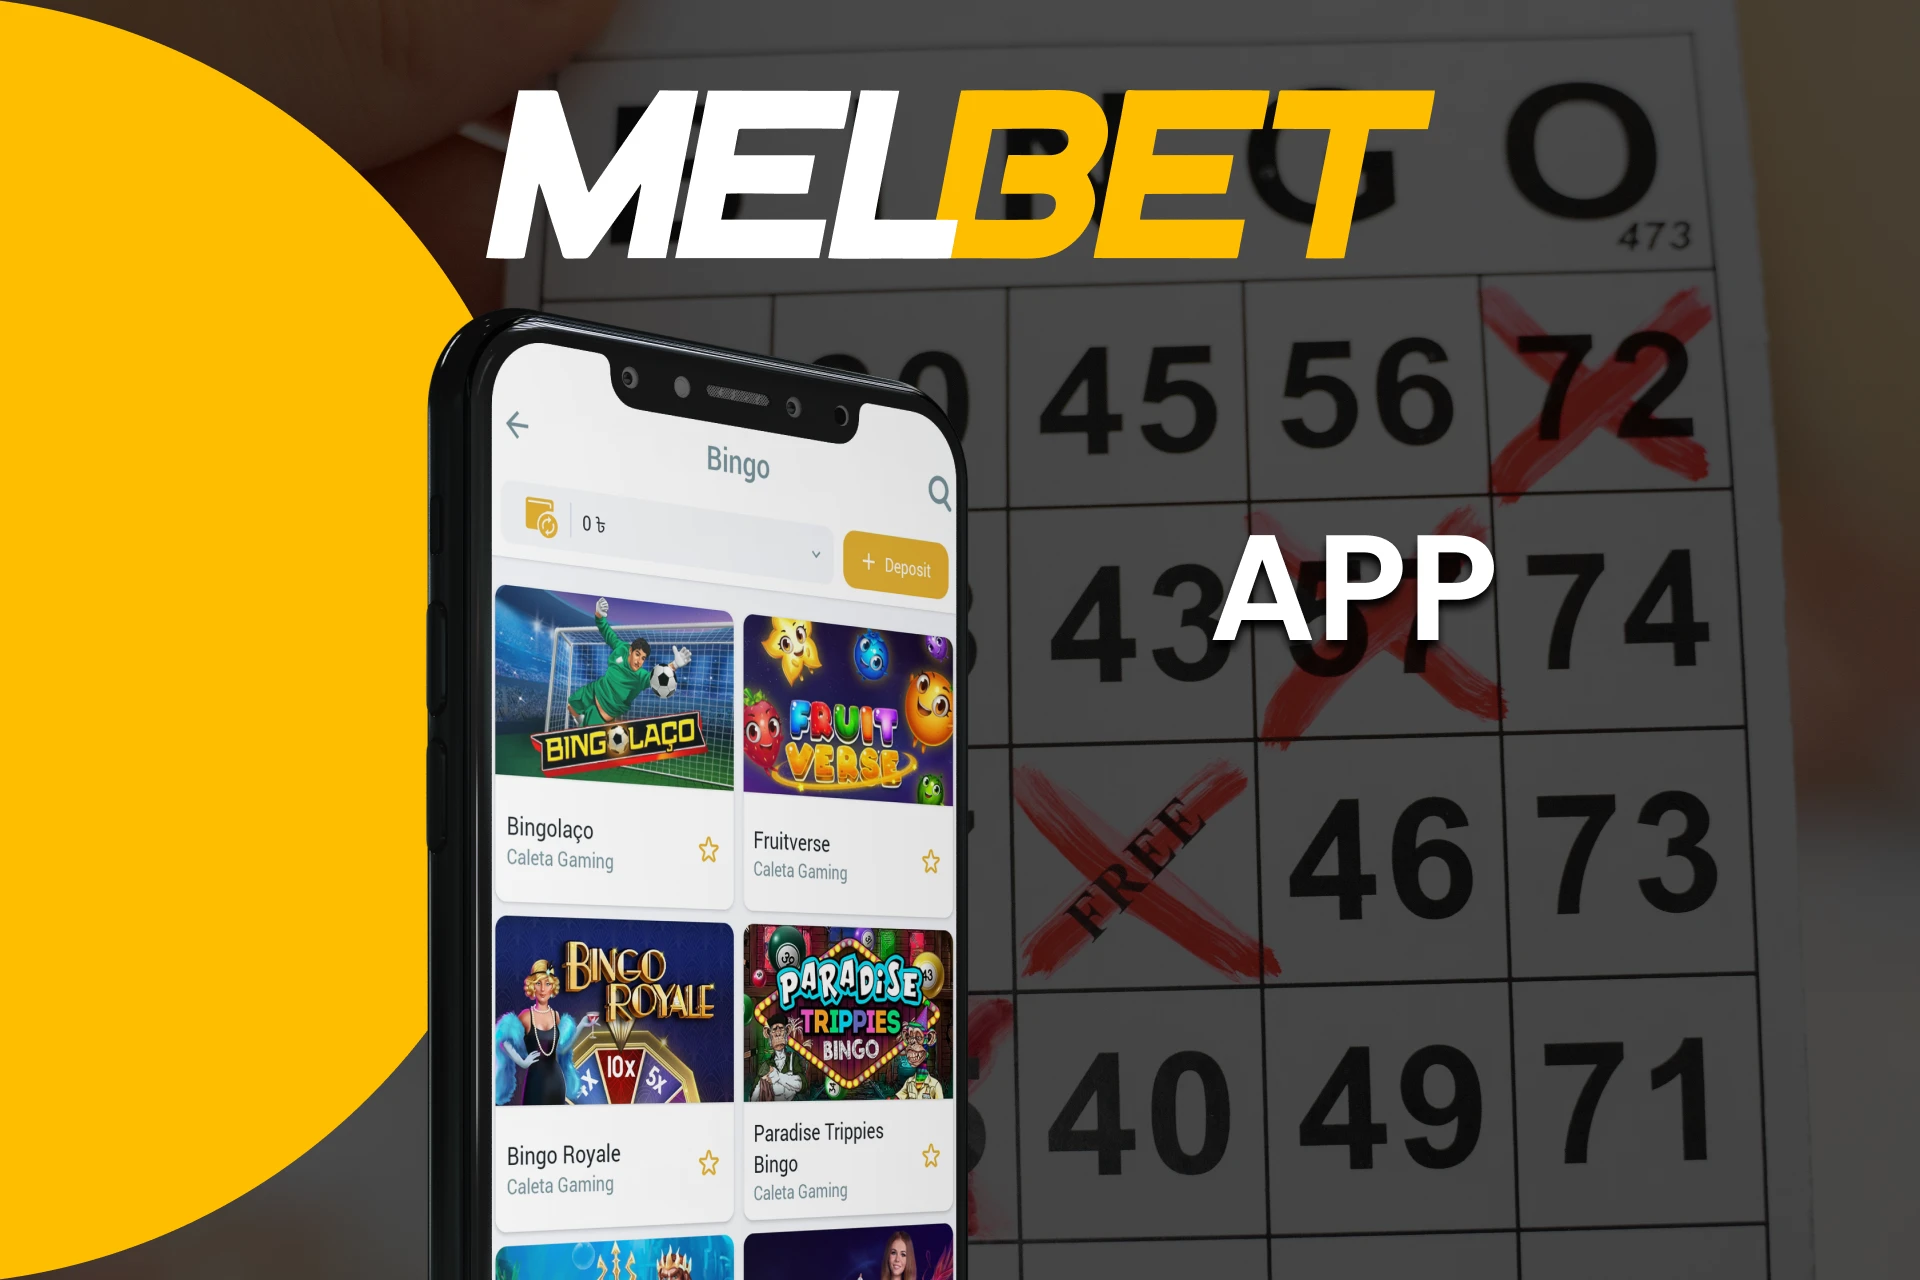 Play Bingo through the Melbet app.